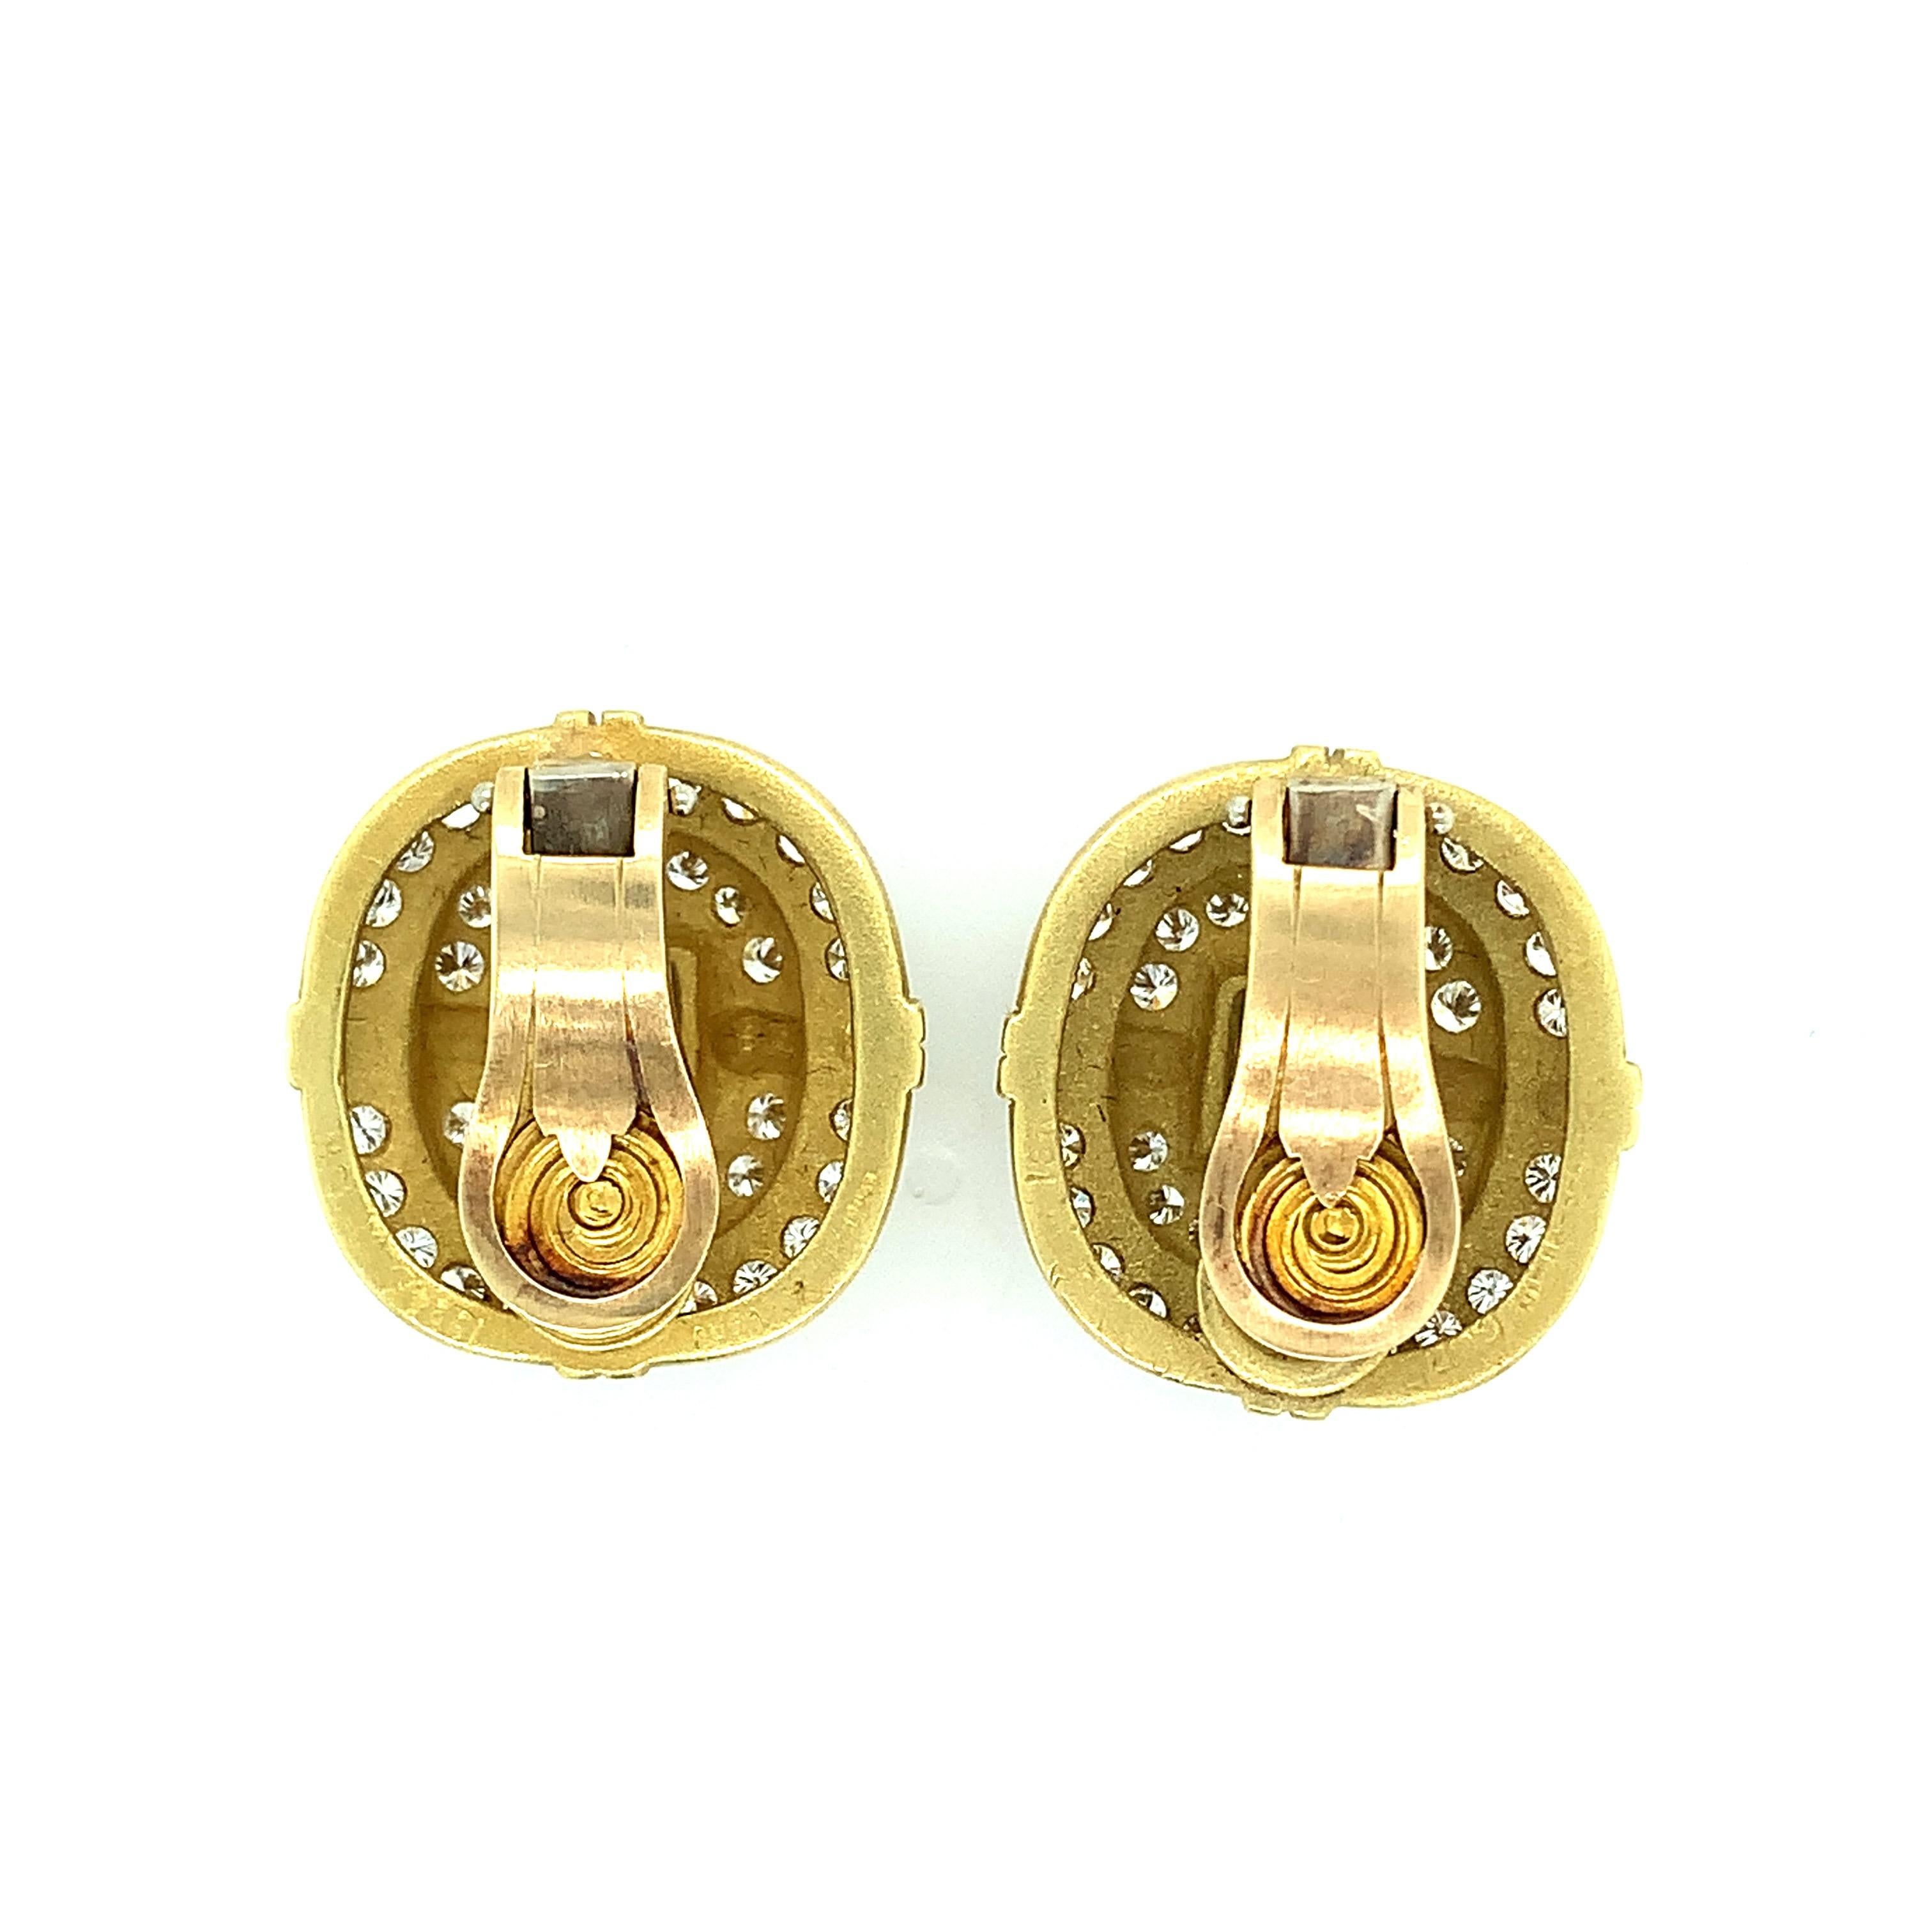 Kieselstein-Cord 18 karat yellow gold ear clips with diamonds and peridot. The diamonds weigh approximately 3 carats and the peridots weigh approximately 5 carats. Marked: Kieselstein-Cord / 1984 / 18K. Total weight: 24.3 grams. Width: 2.2 cm.